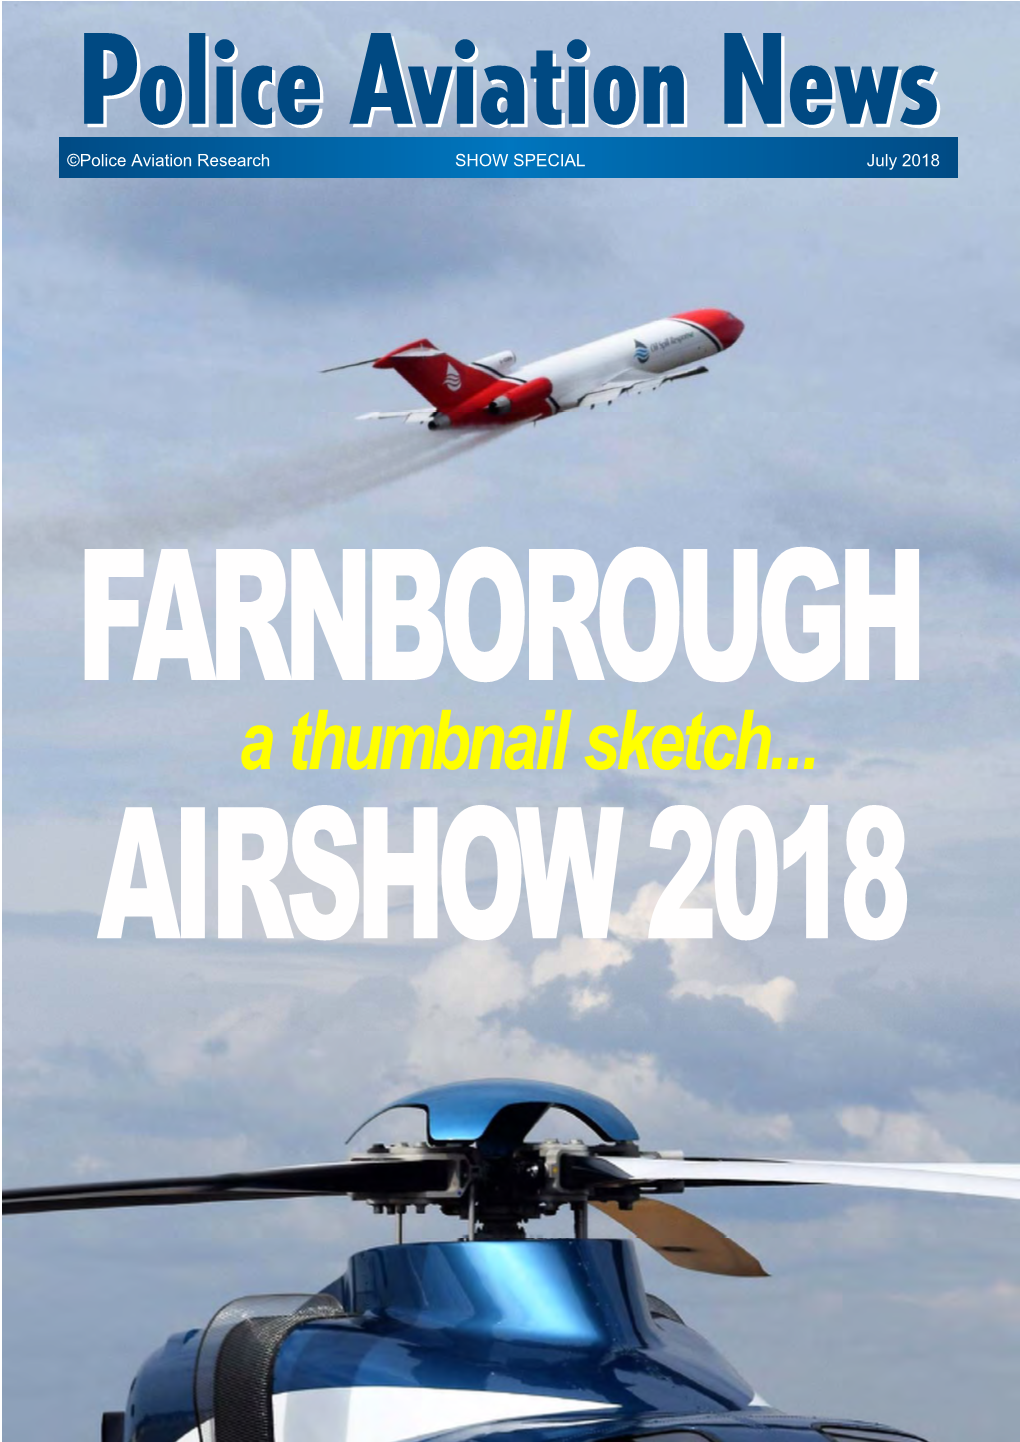 Police Aviation News Farnborough Airshow July 2018 1 # ©Police Aviation Research SHOW SPECIAL July 2018